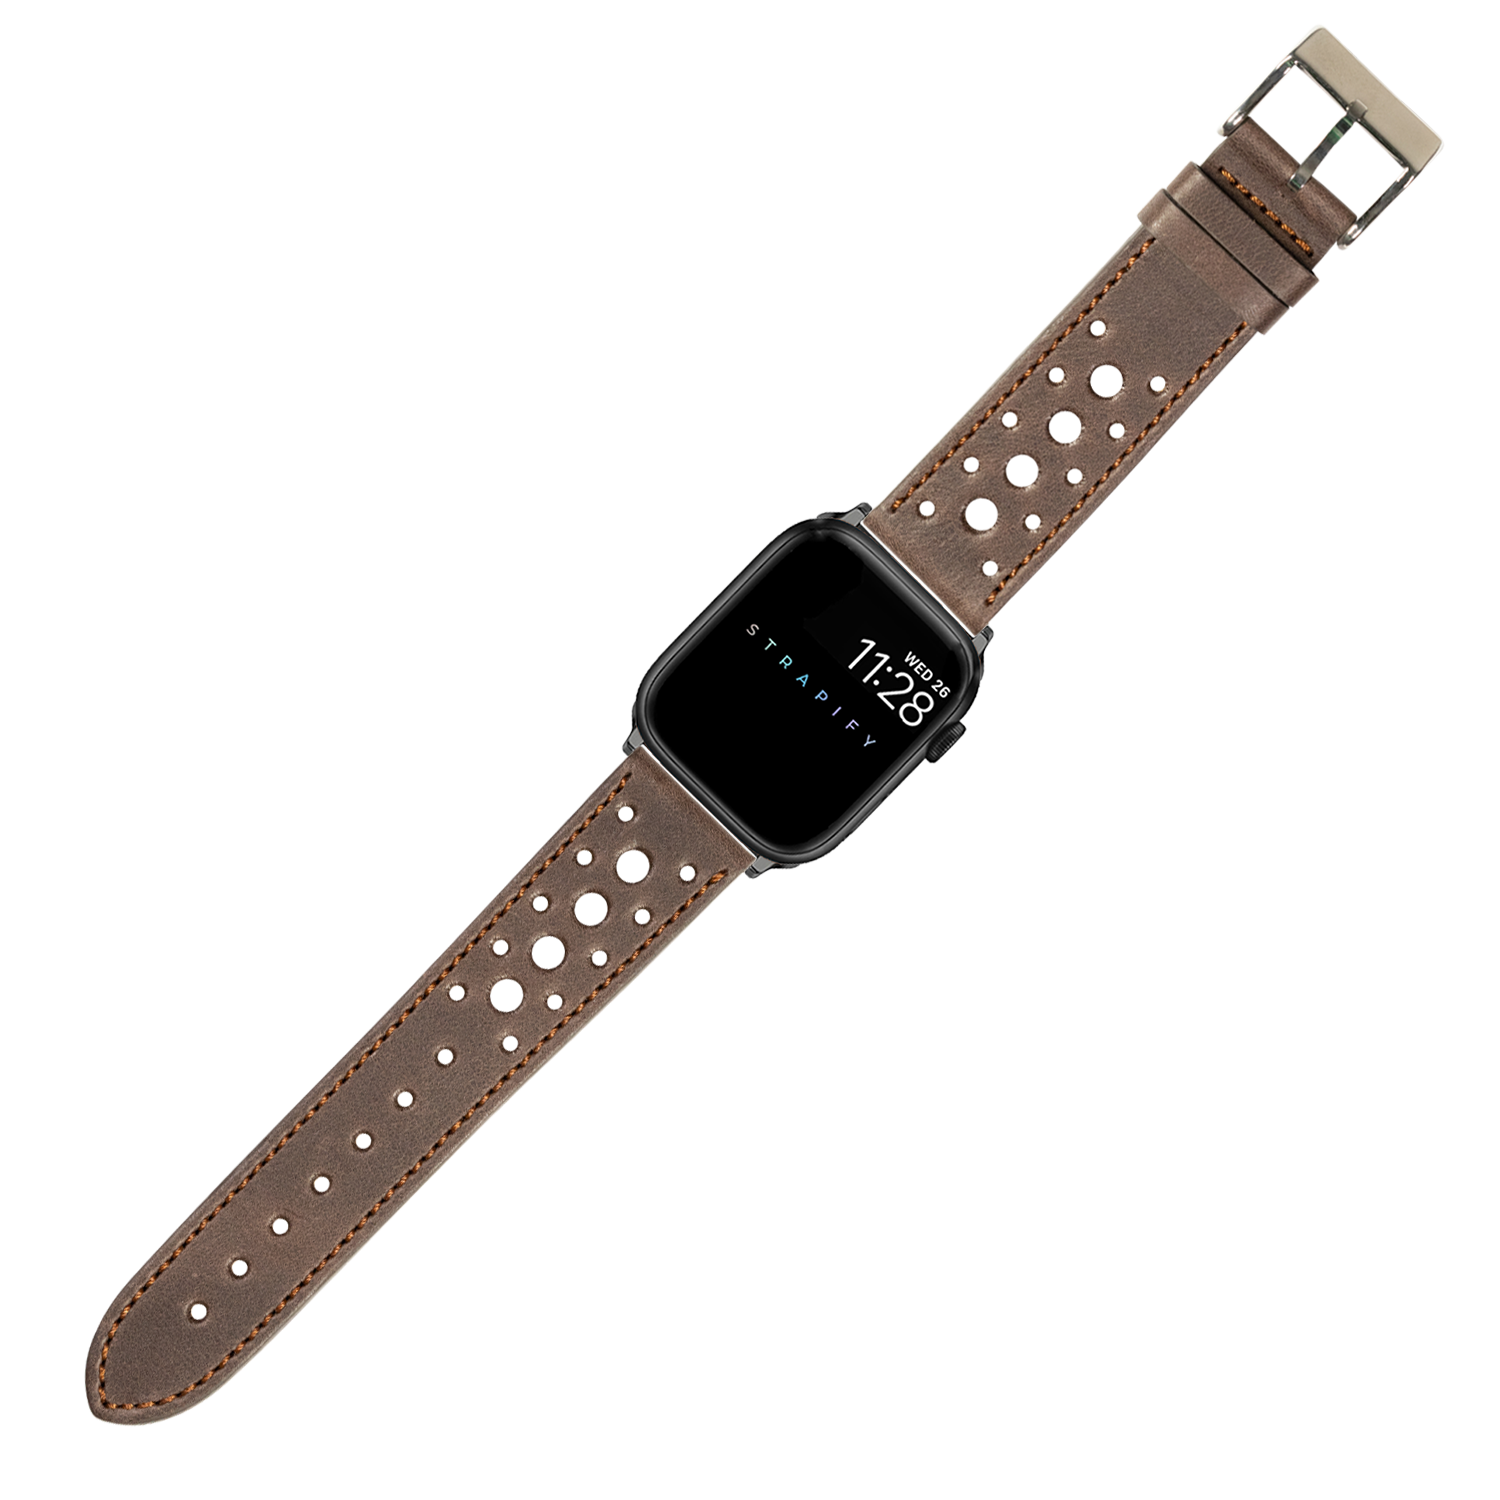 [Apple Watch] Leather - Daytona - Dark Brown